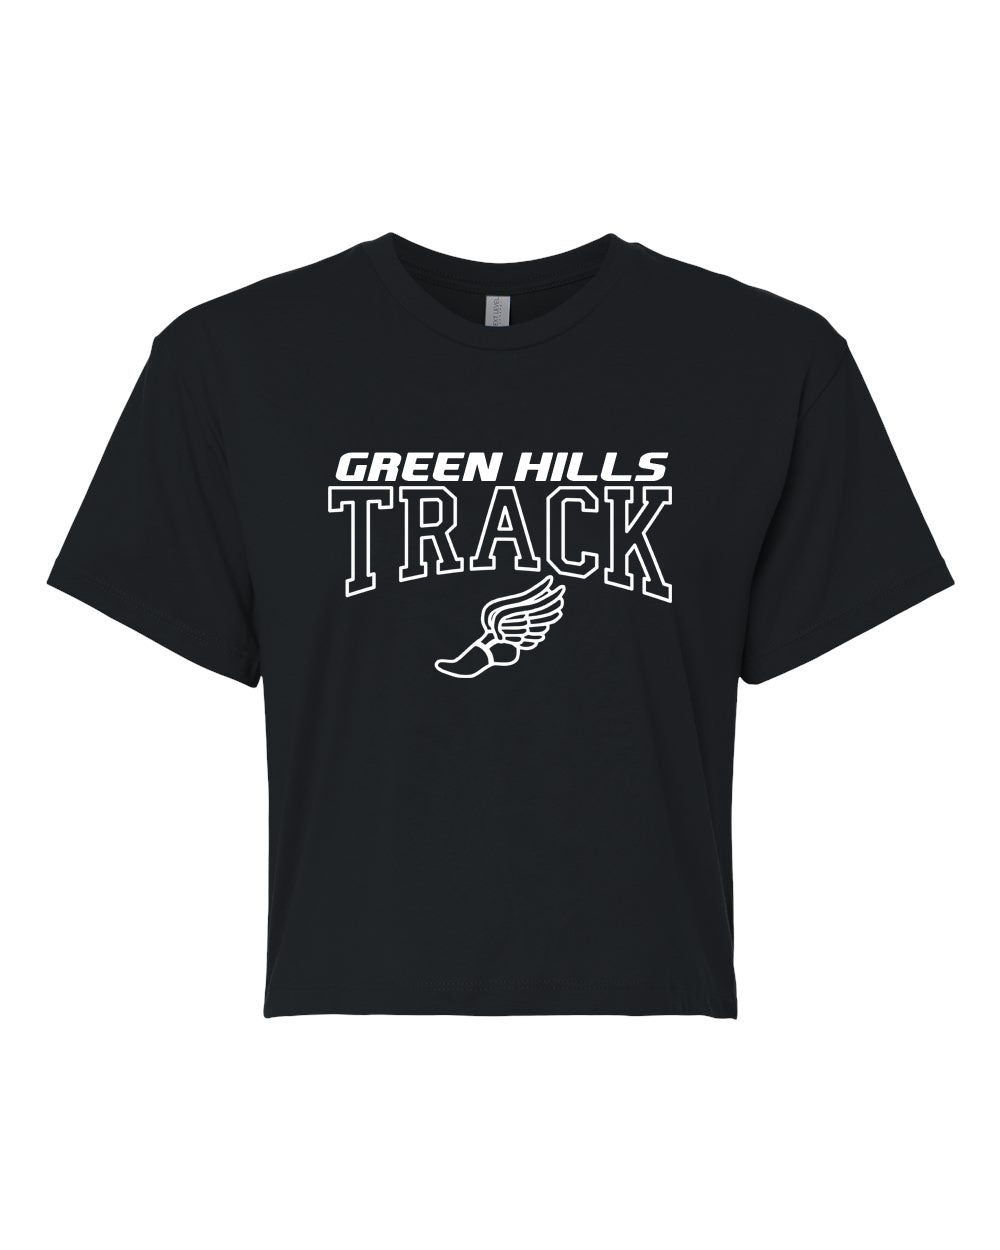 Green Hills Track design 3 Crop Top